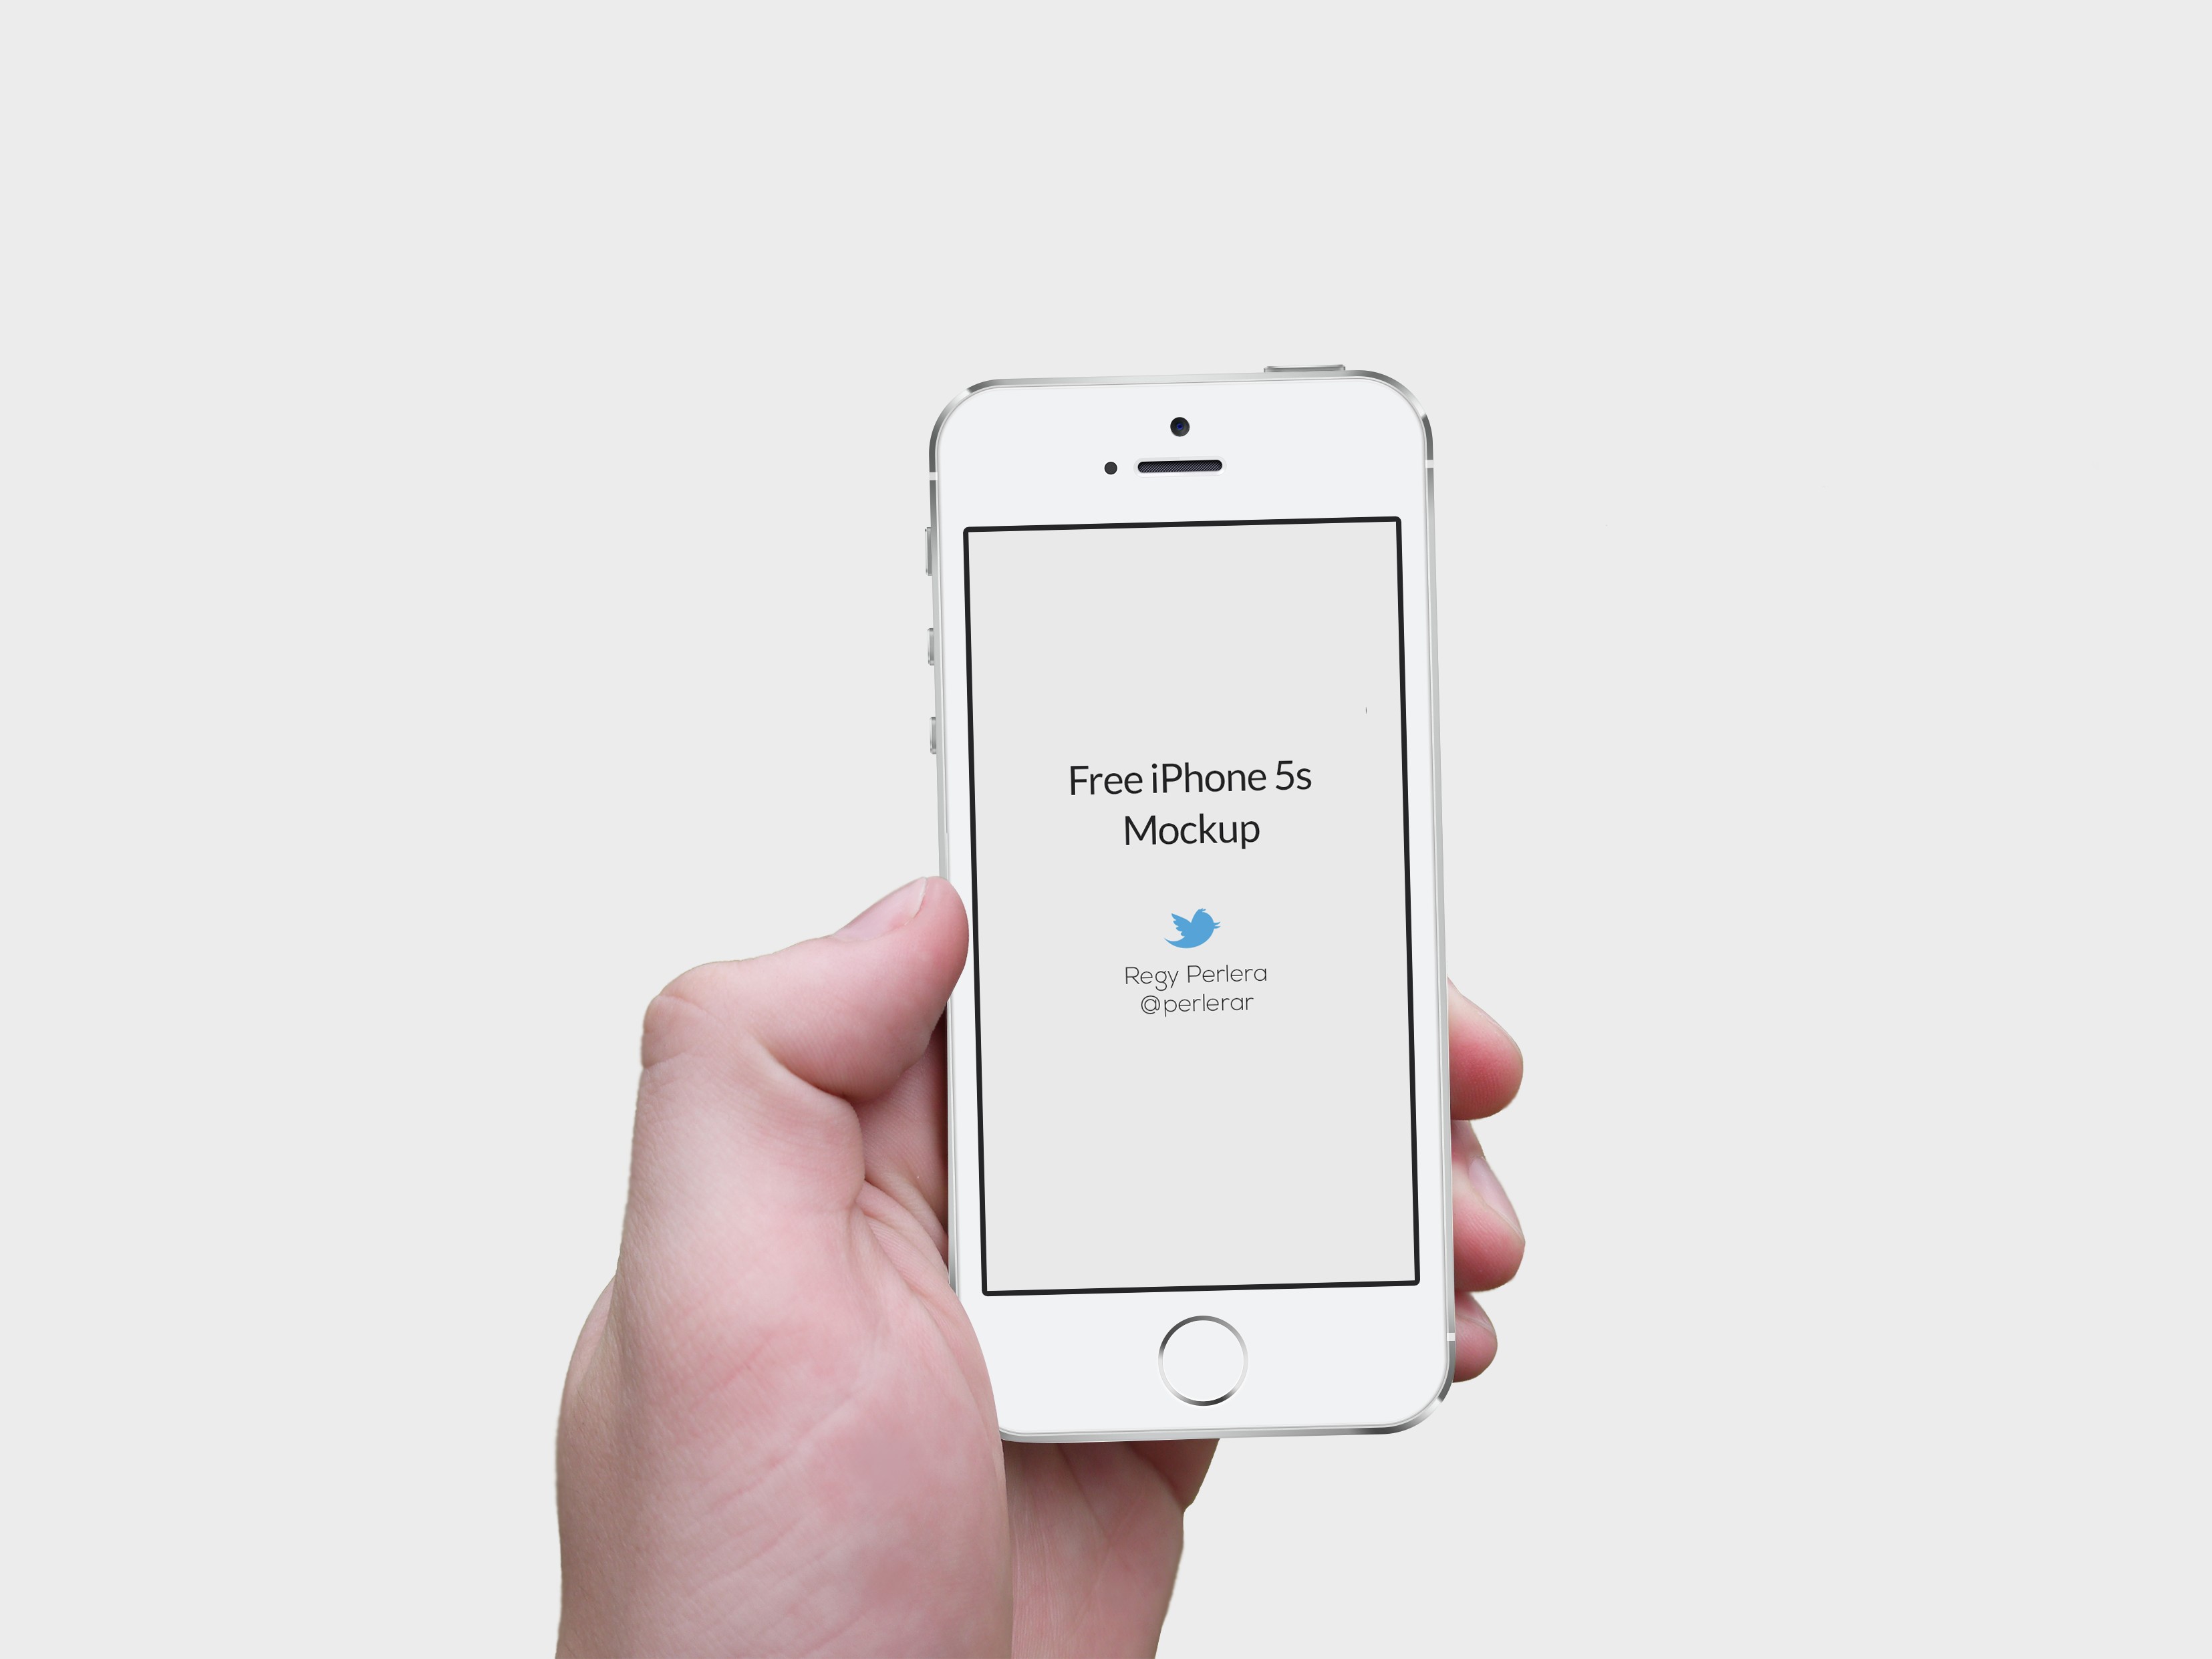 iPhone Papercraft Ipad and iPhone 5s Mockups Template Psd